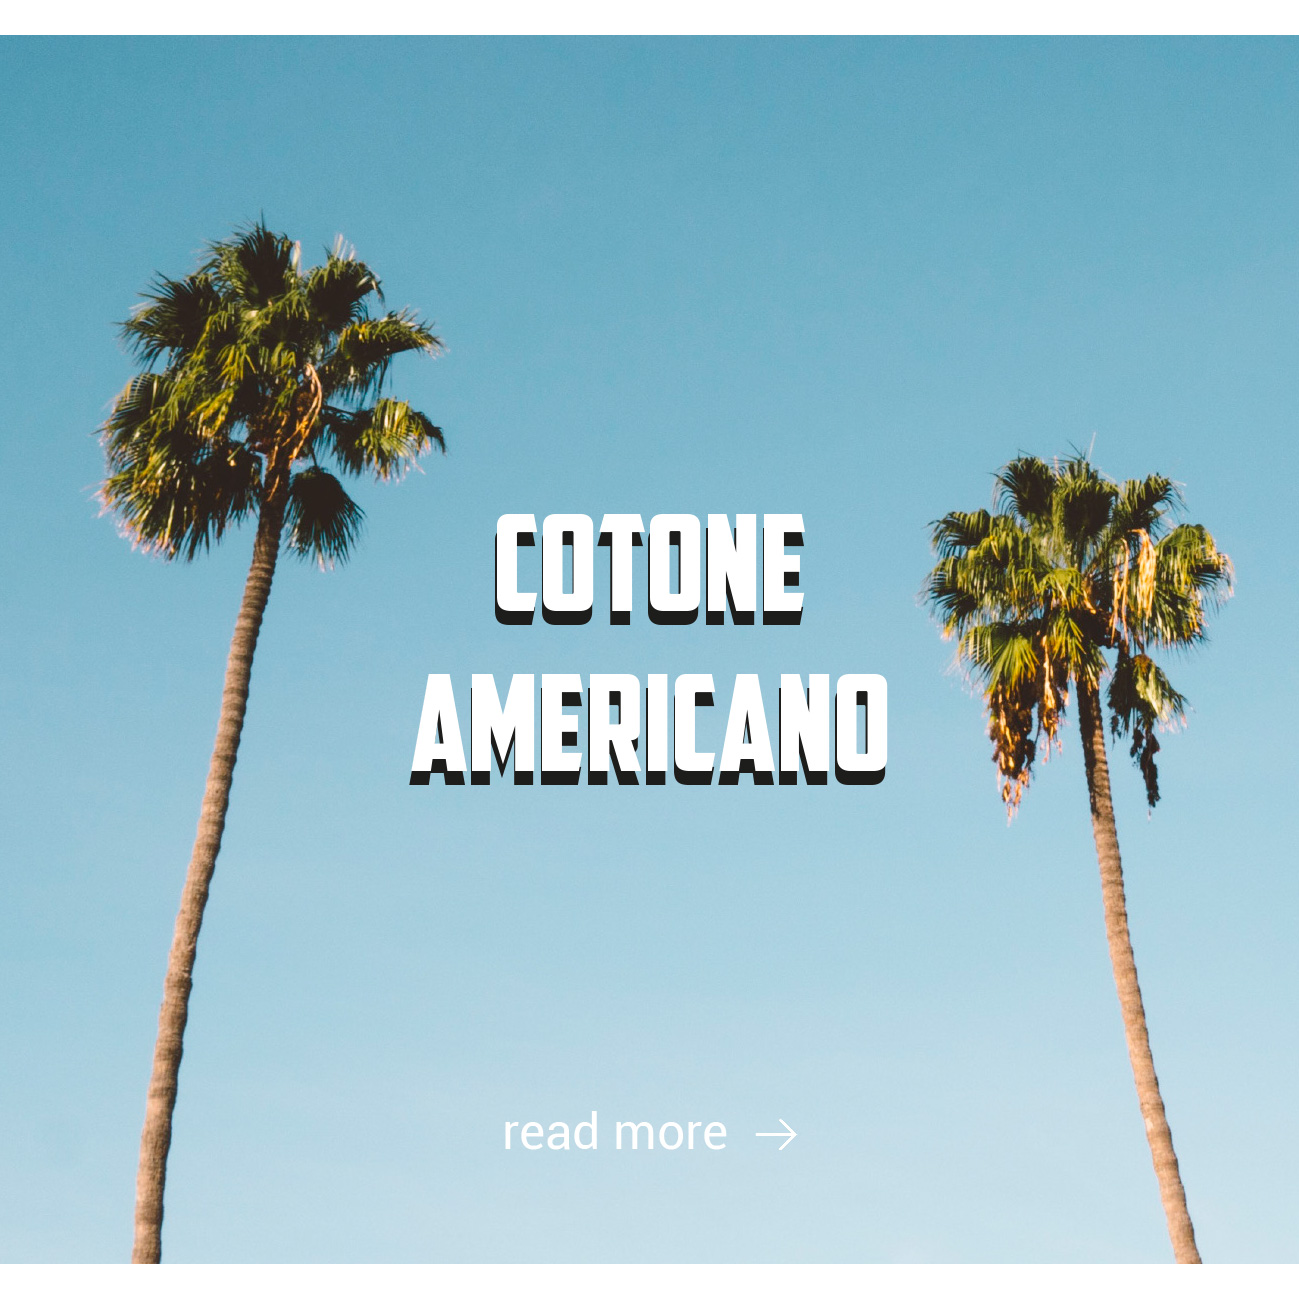 american cotton